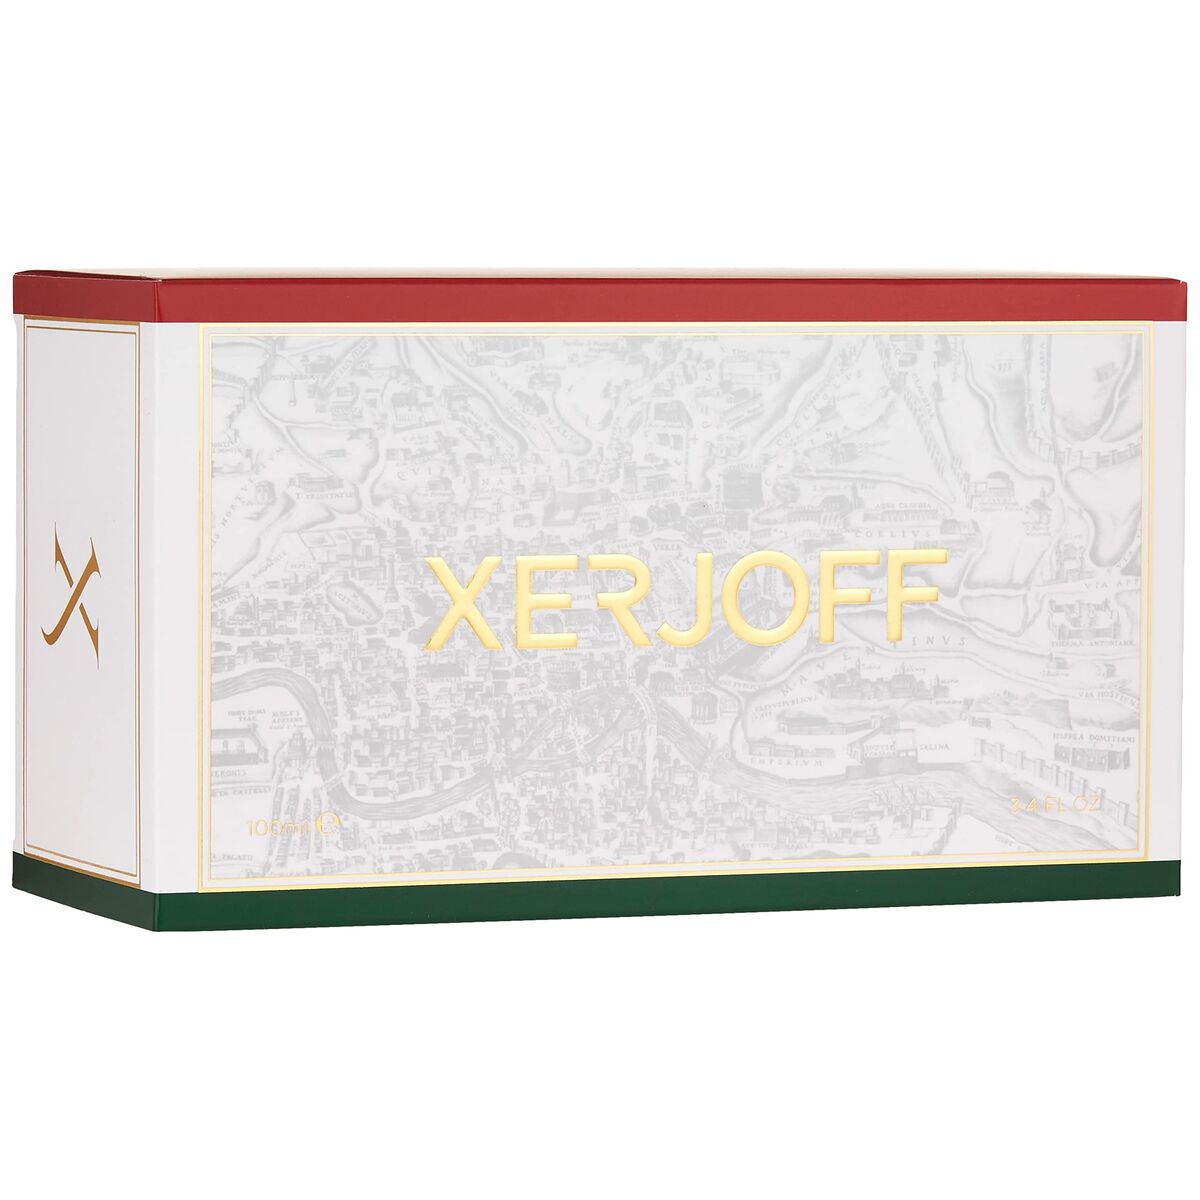 Uniseks Parfum Xerjoff XJ 1861 Zefiro EDP EDP 100 ml